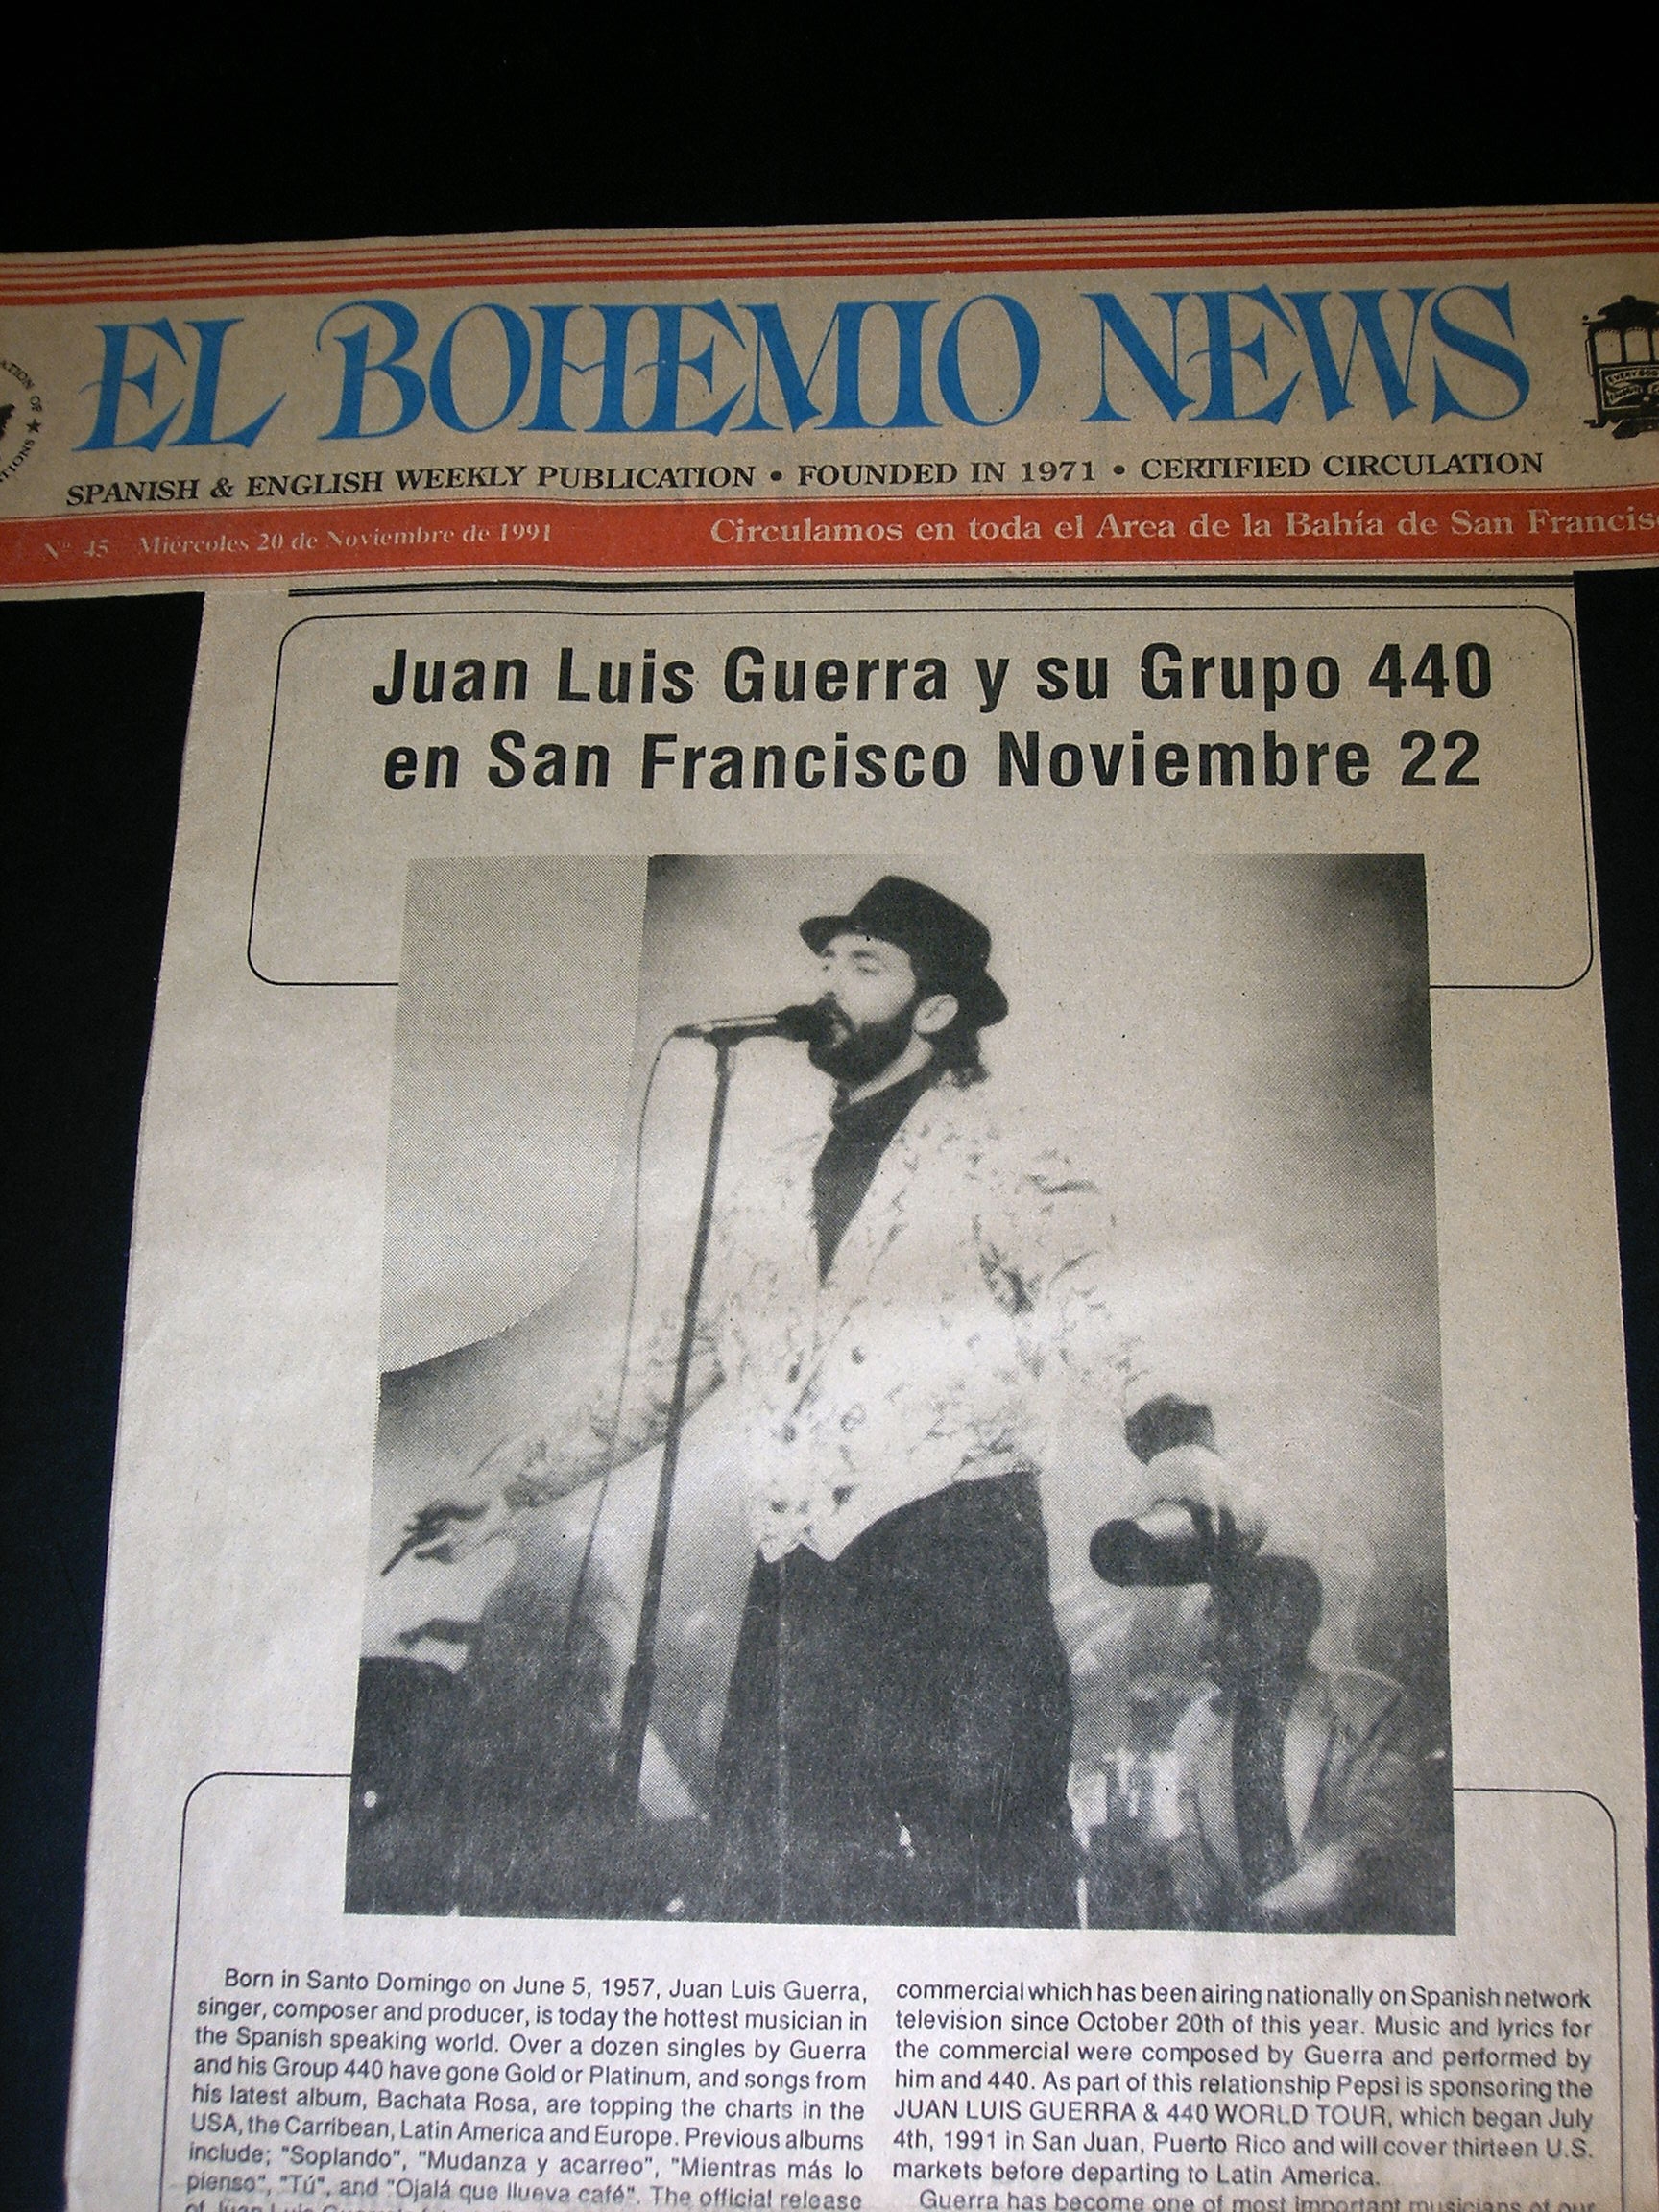 Pepsi/Juan Luis Guerra Tour Image